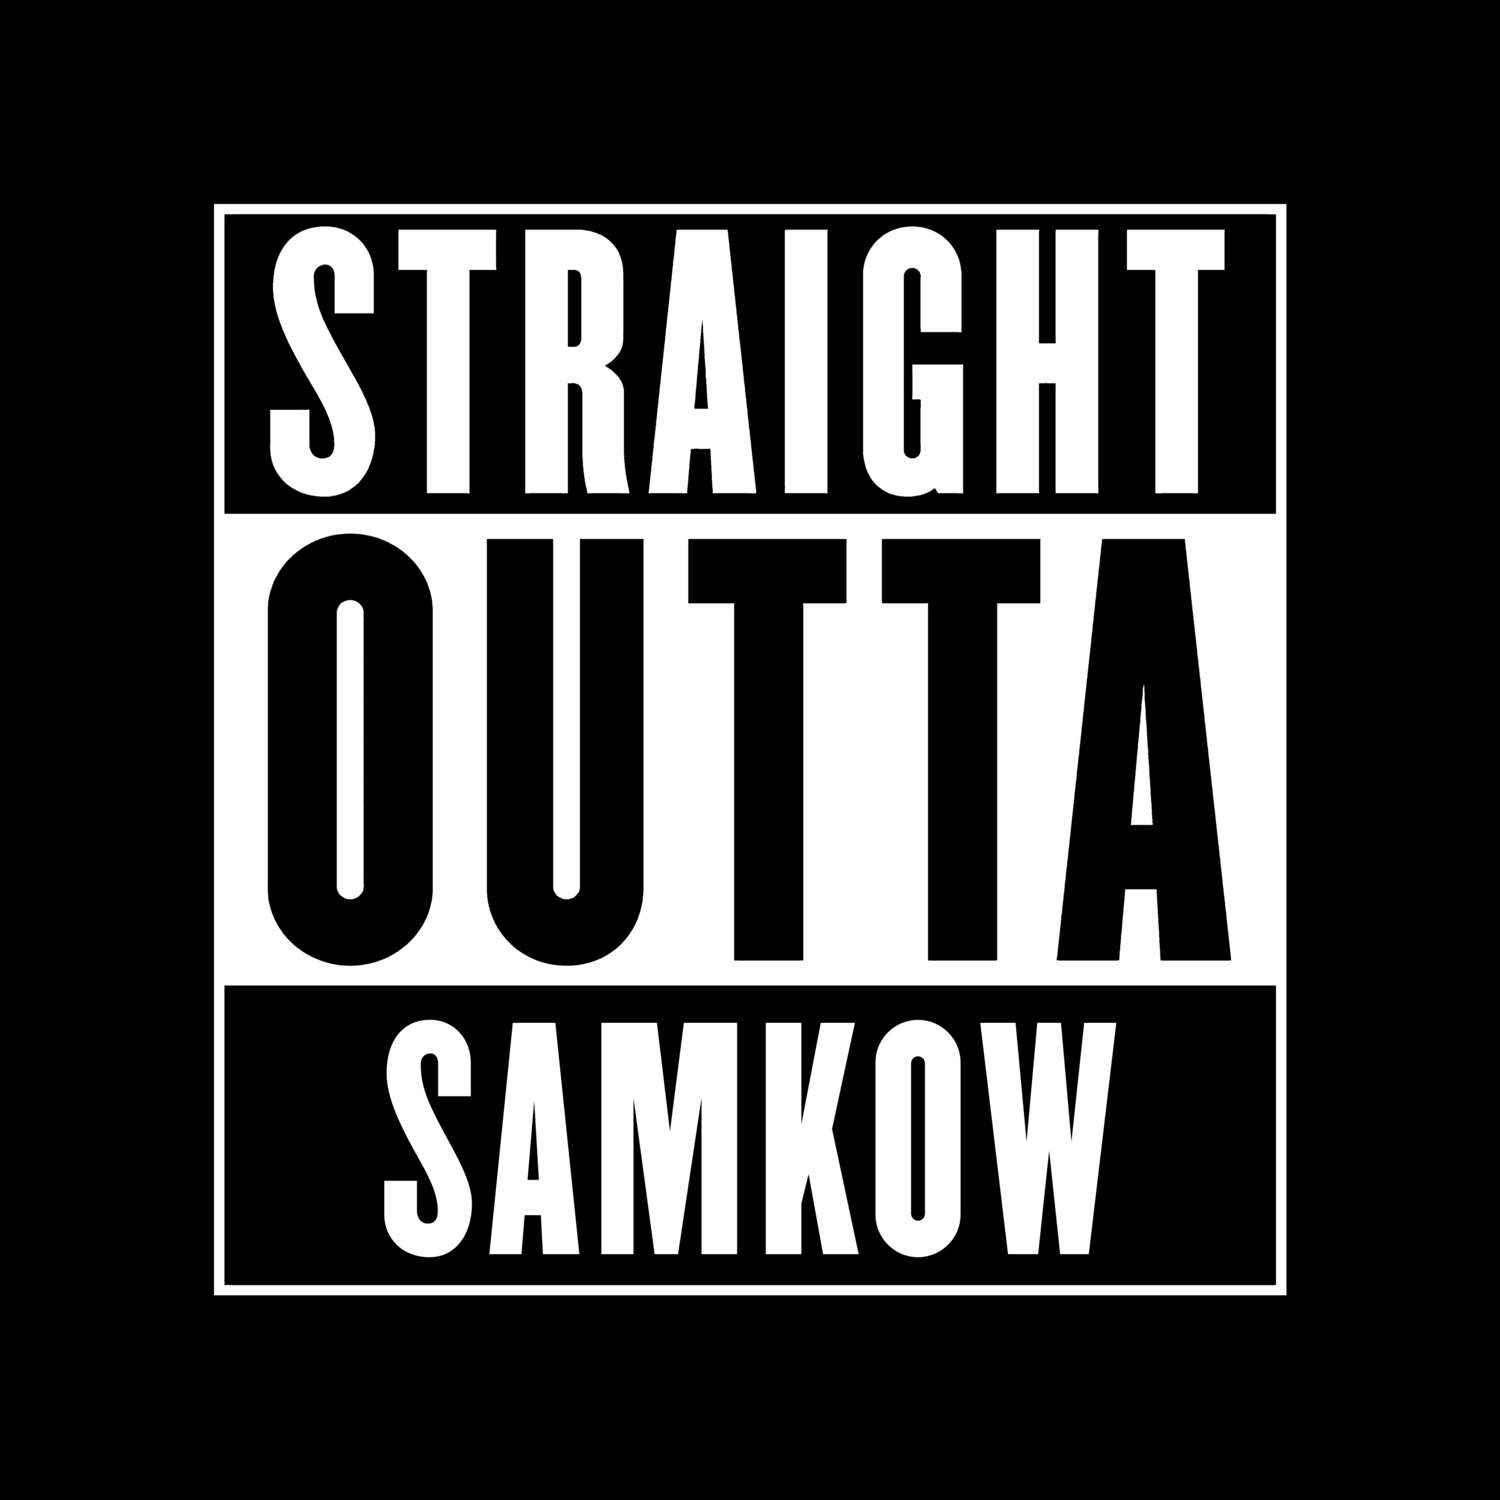 Samkow T-Shirt »Straight Outta«